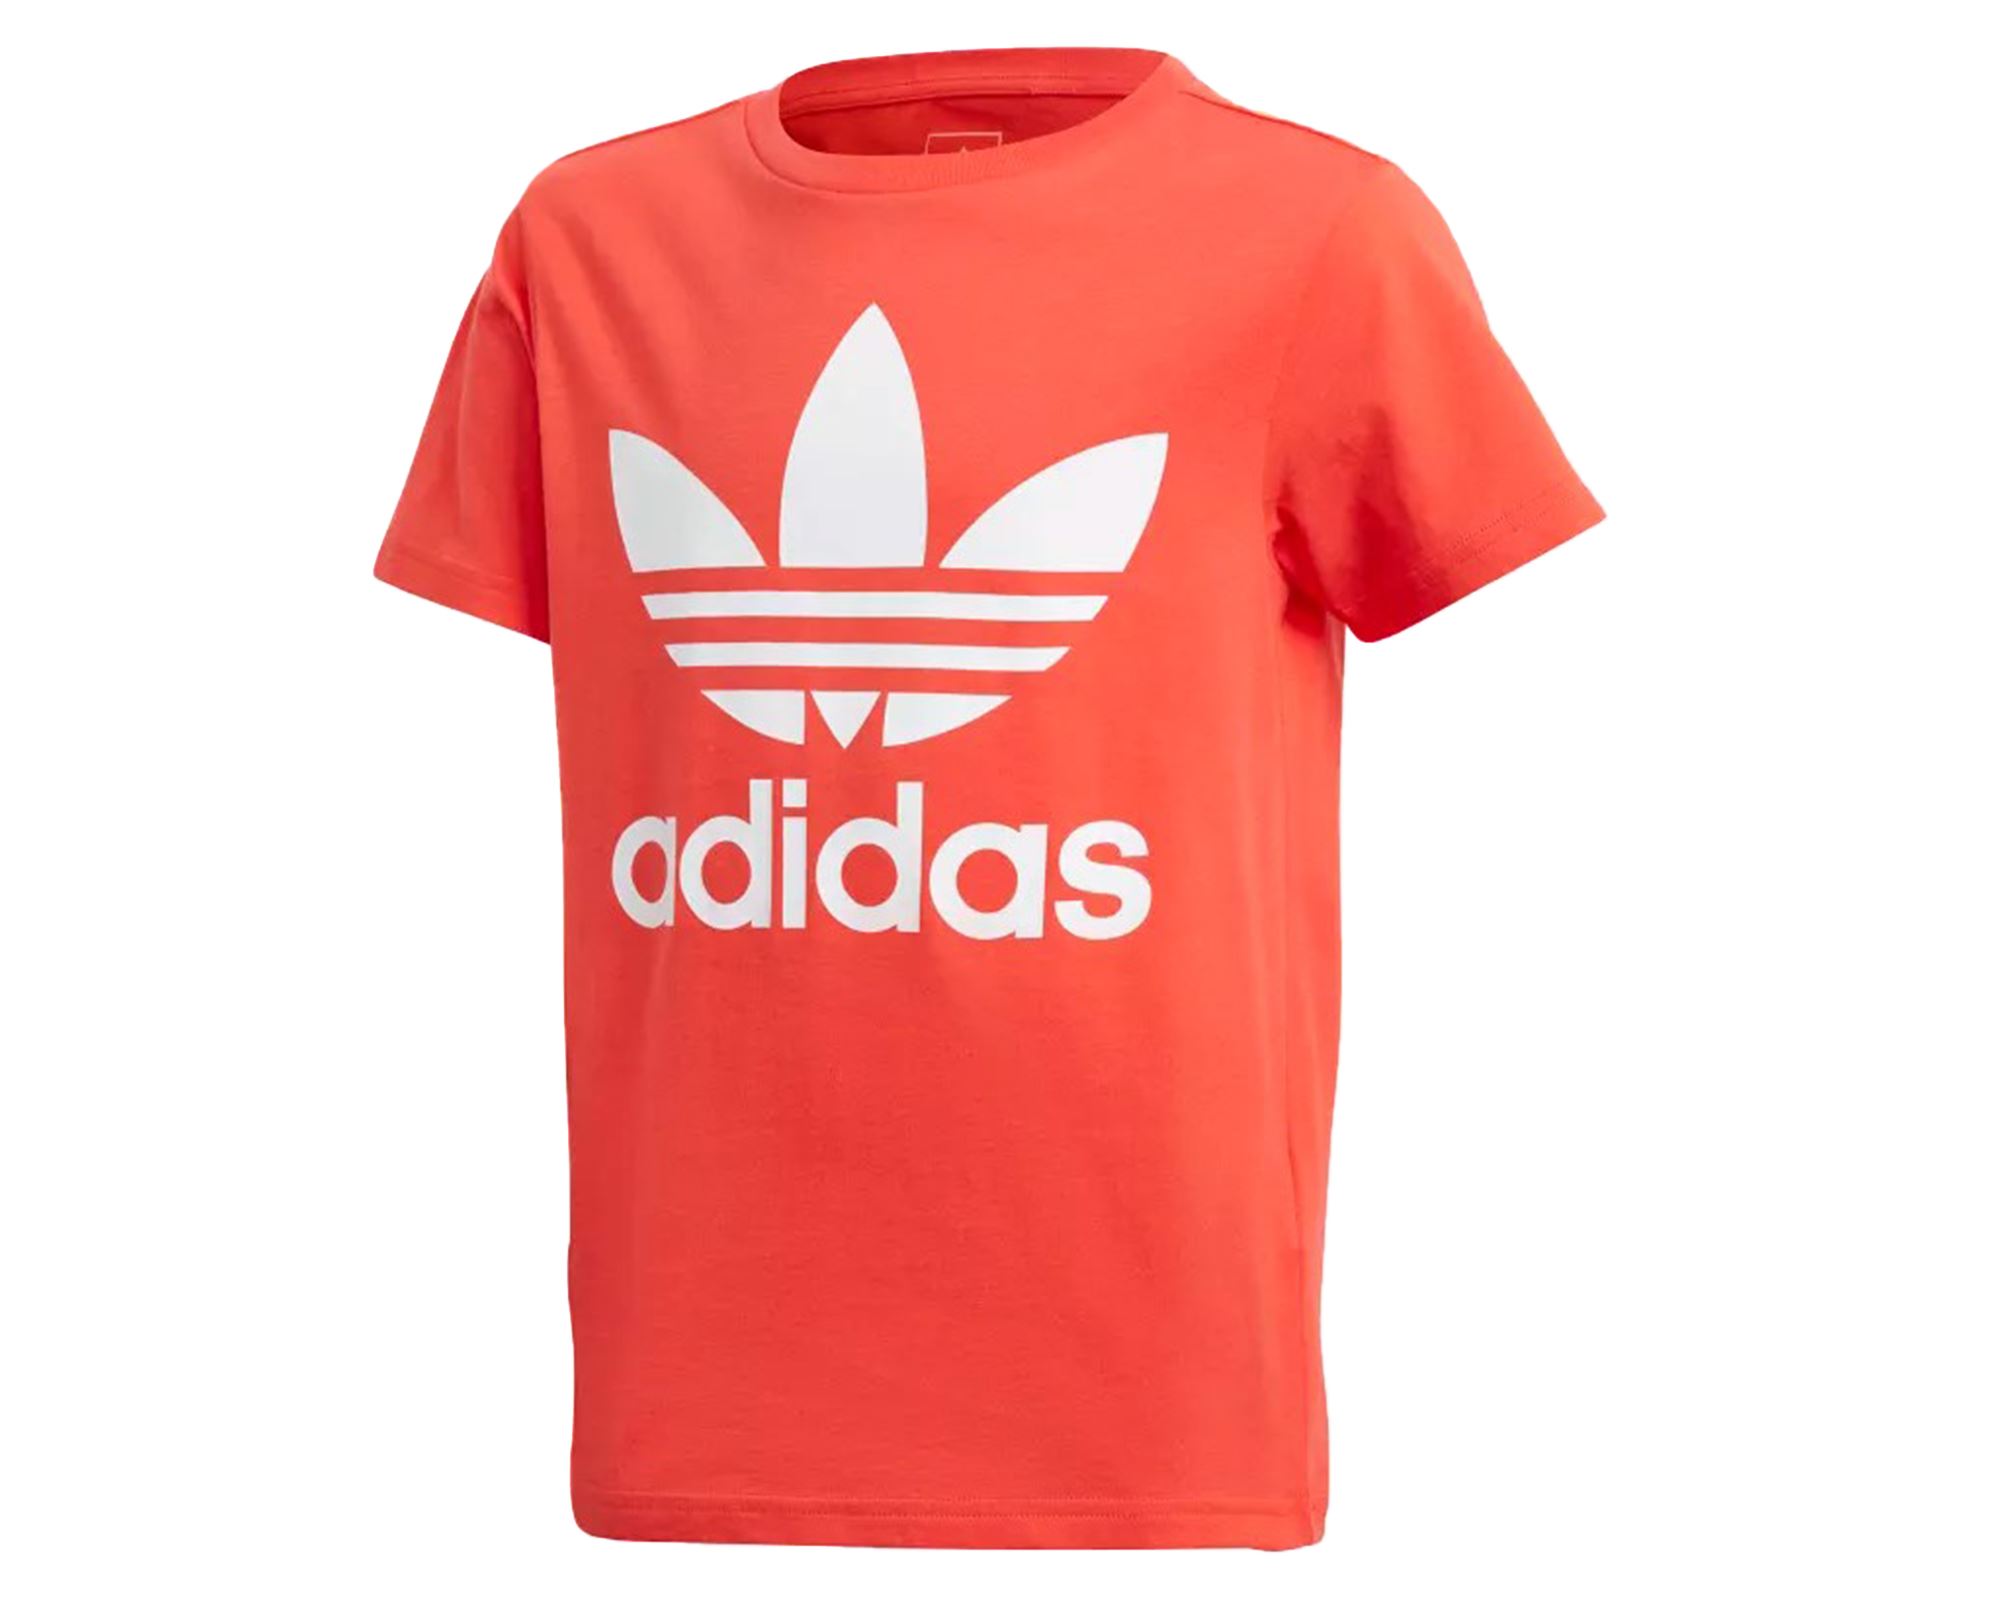 youth adidas trefoil shirt